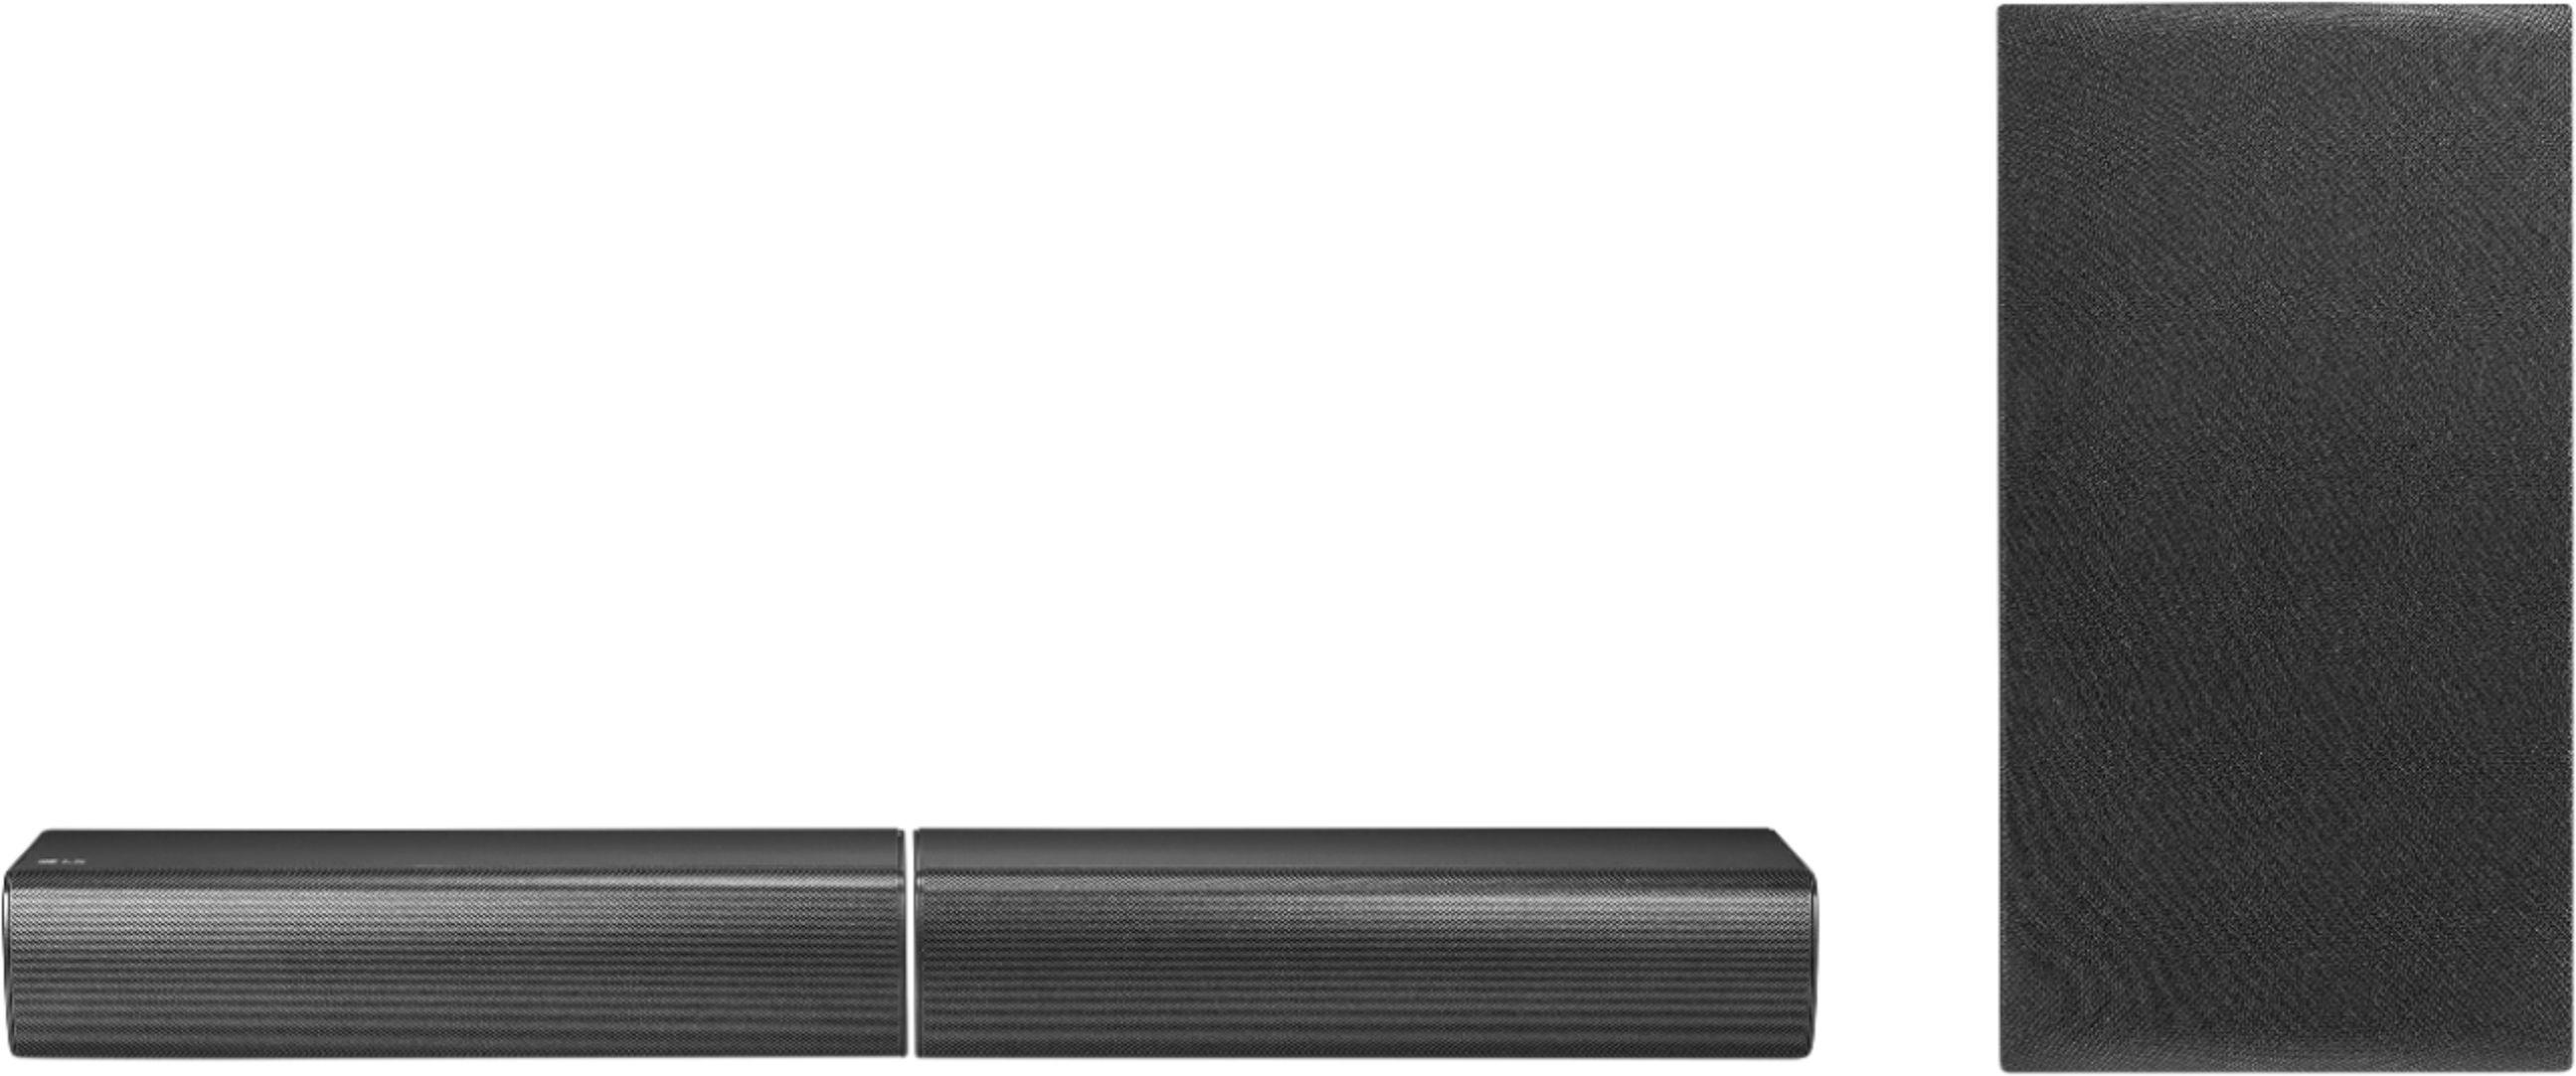 Best Buy: LG SJ7 Bar 4.1 Channel Speaker System with Wireless Subwoofer Bluetooth Streaming Black SJ7